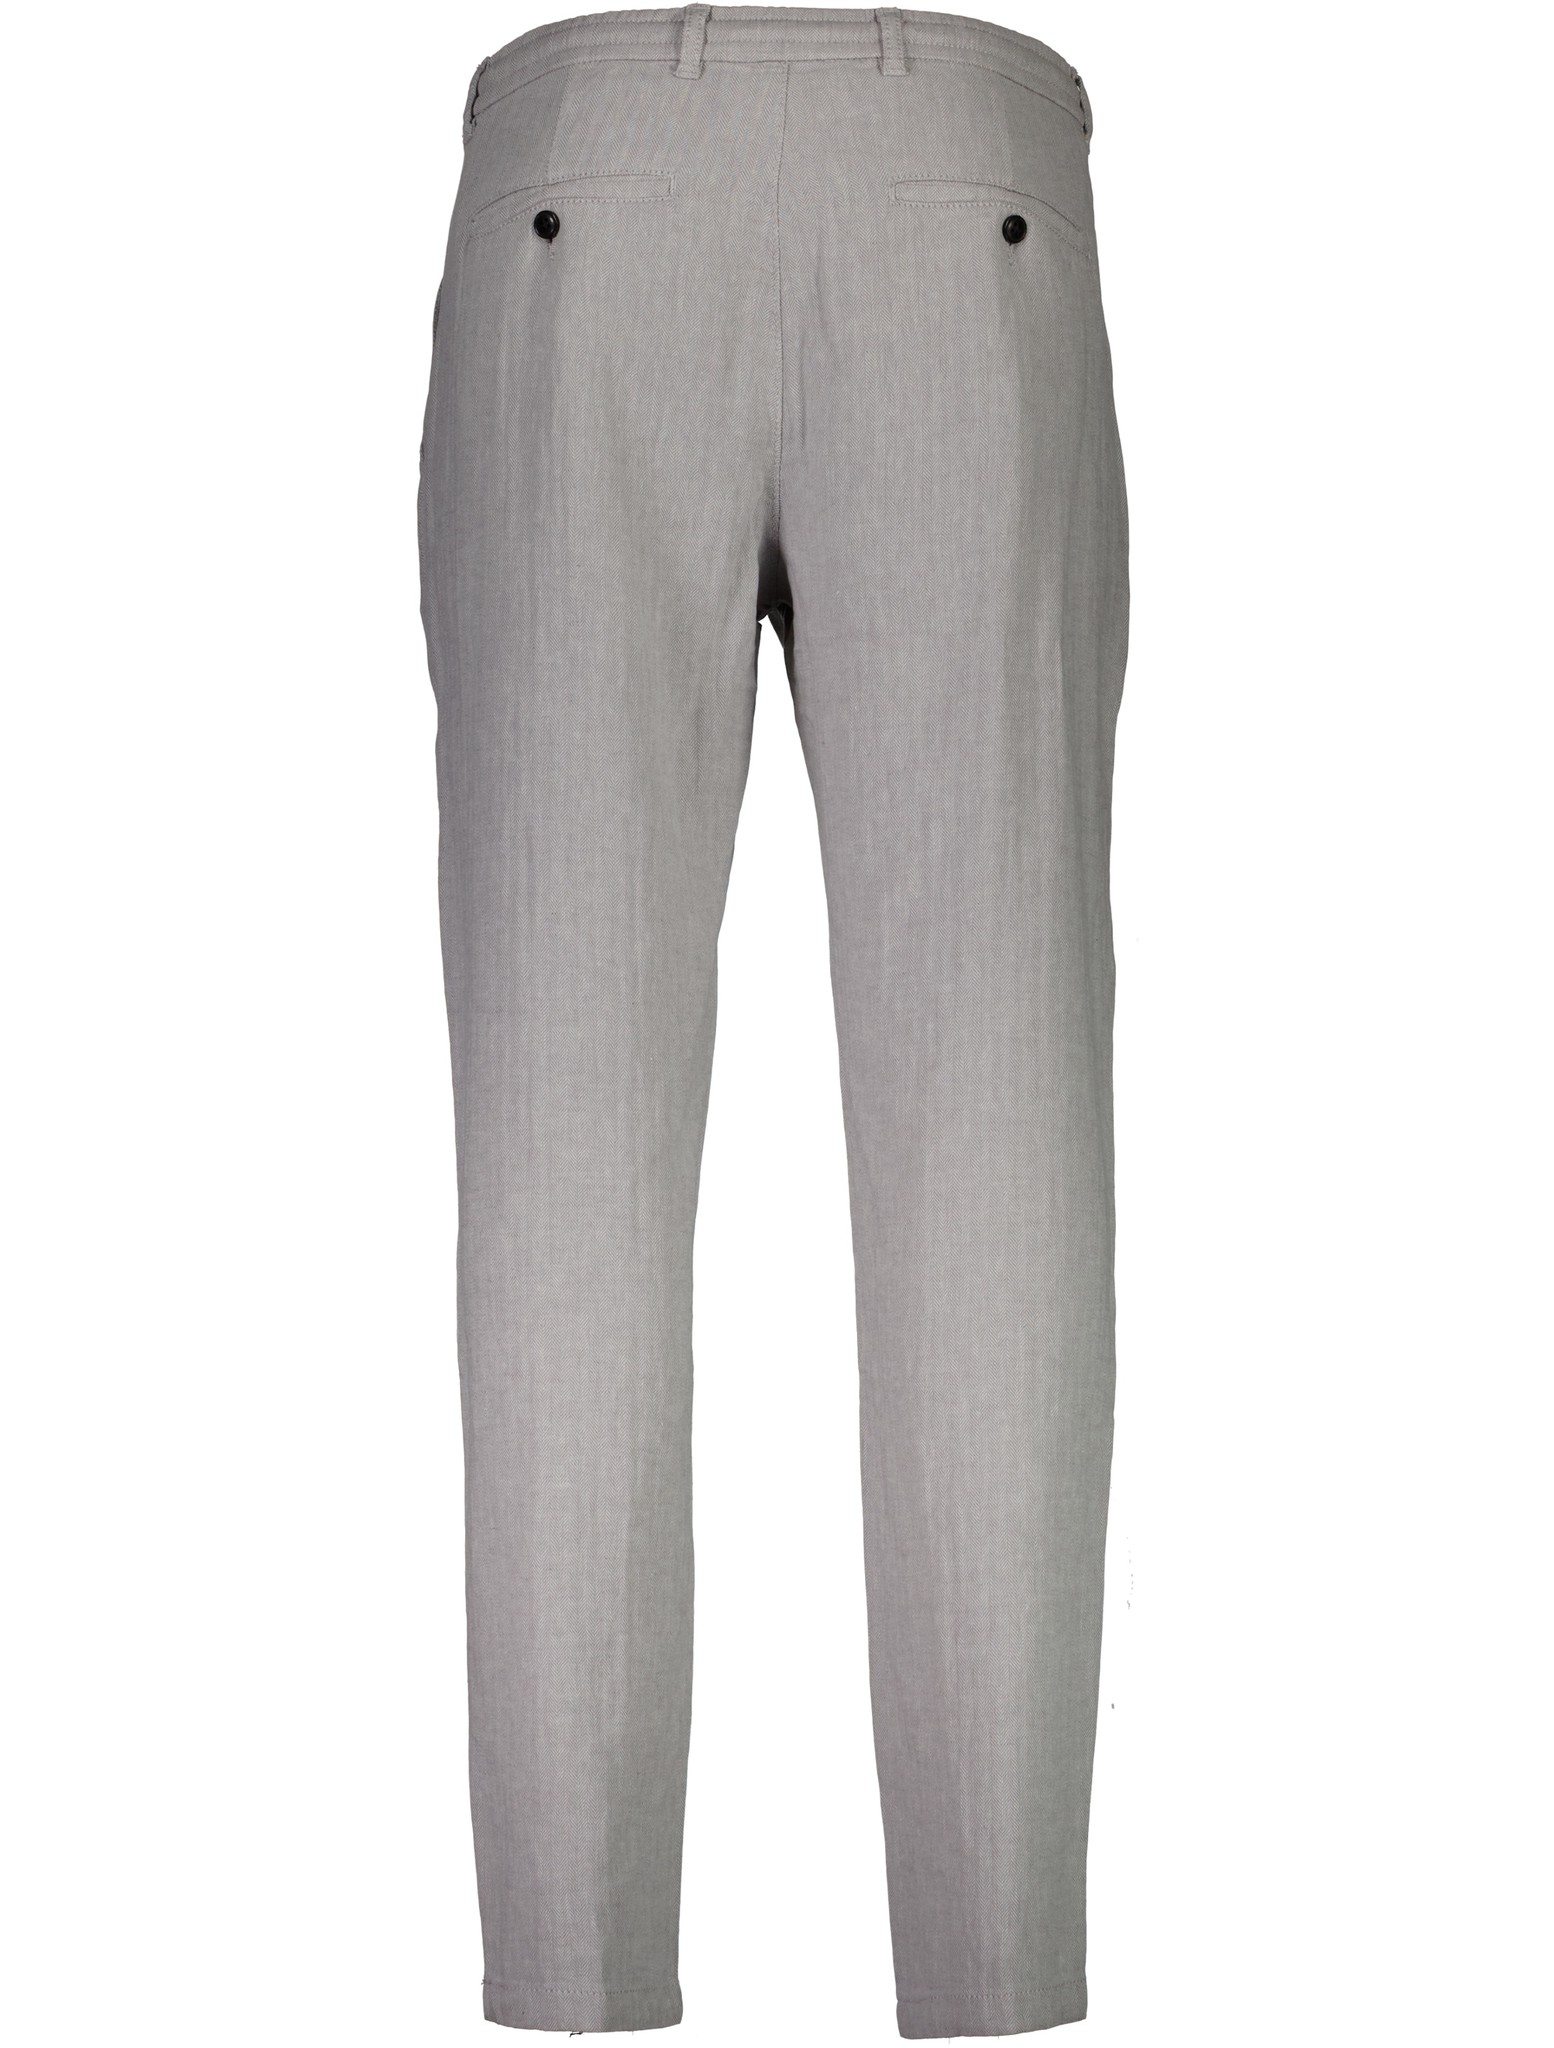 Linen Blend Herringbone Pants Style: 30-003020US - LINDBERGH